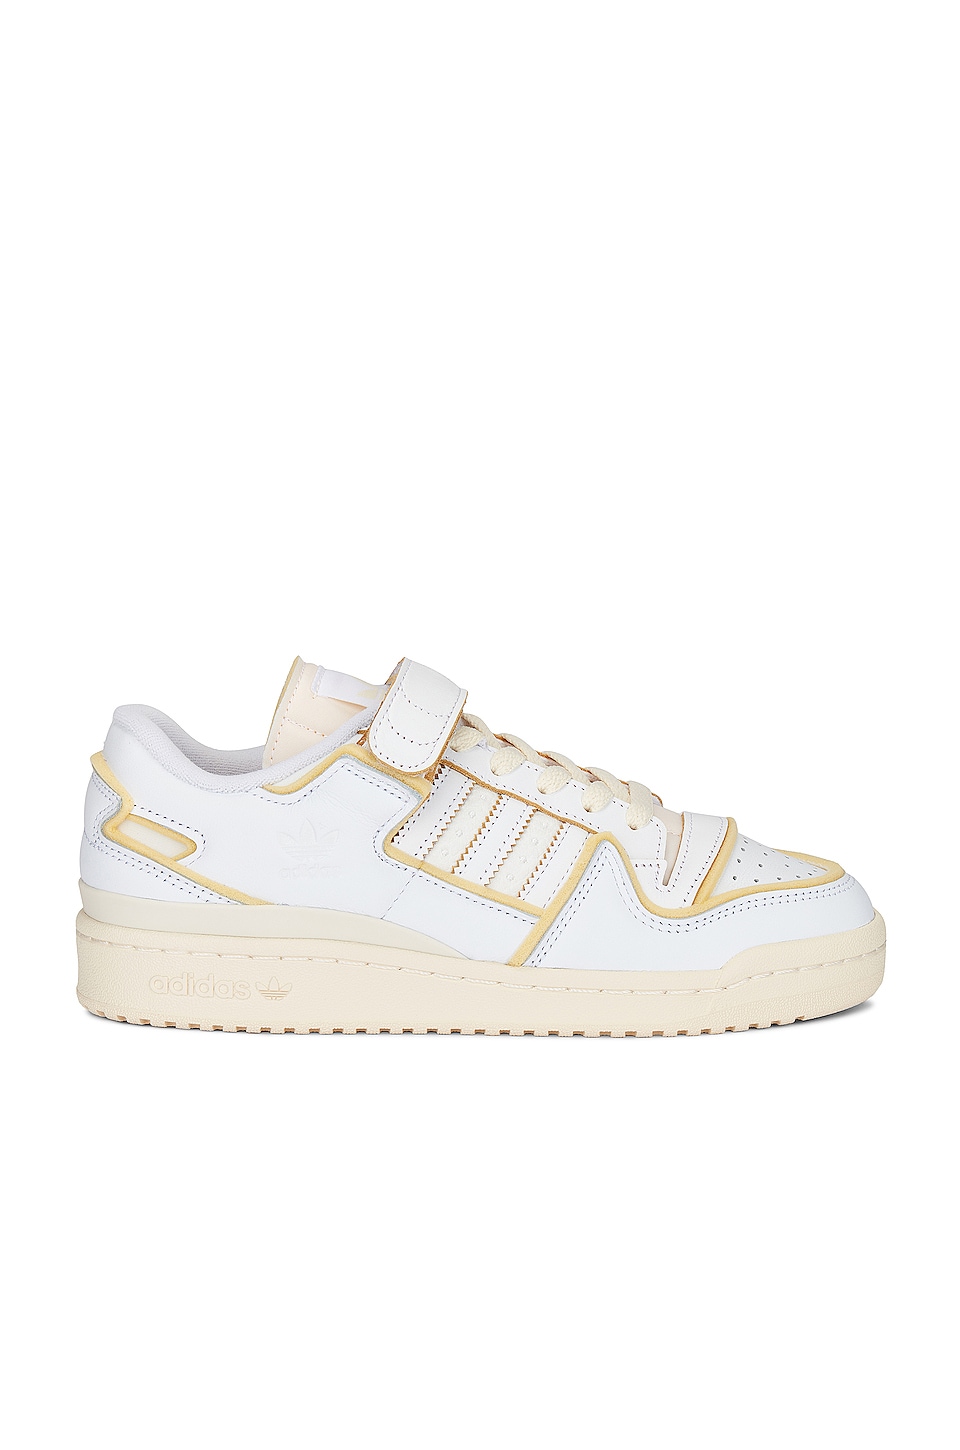 adidas Originals Forum 84 Low Sneaker in White & Off White | REVOLVE